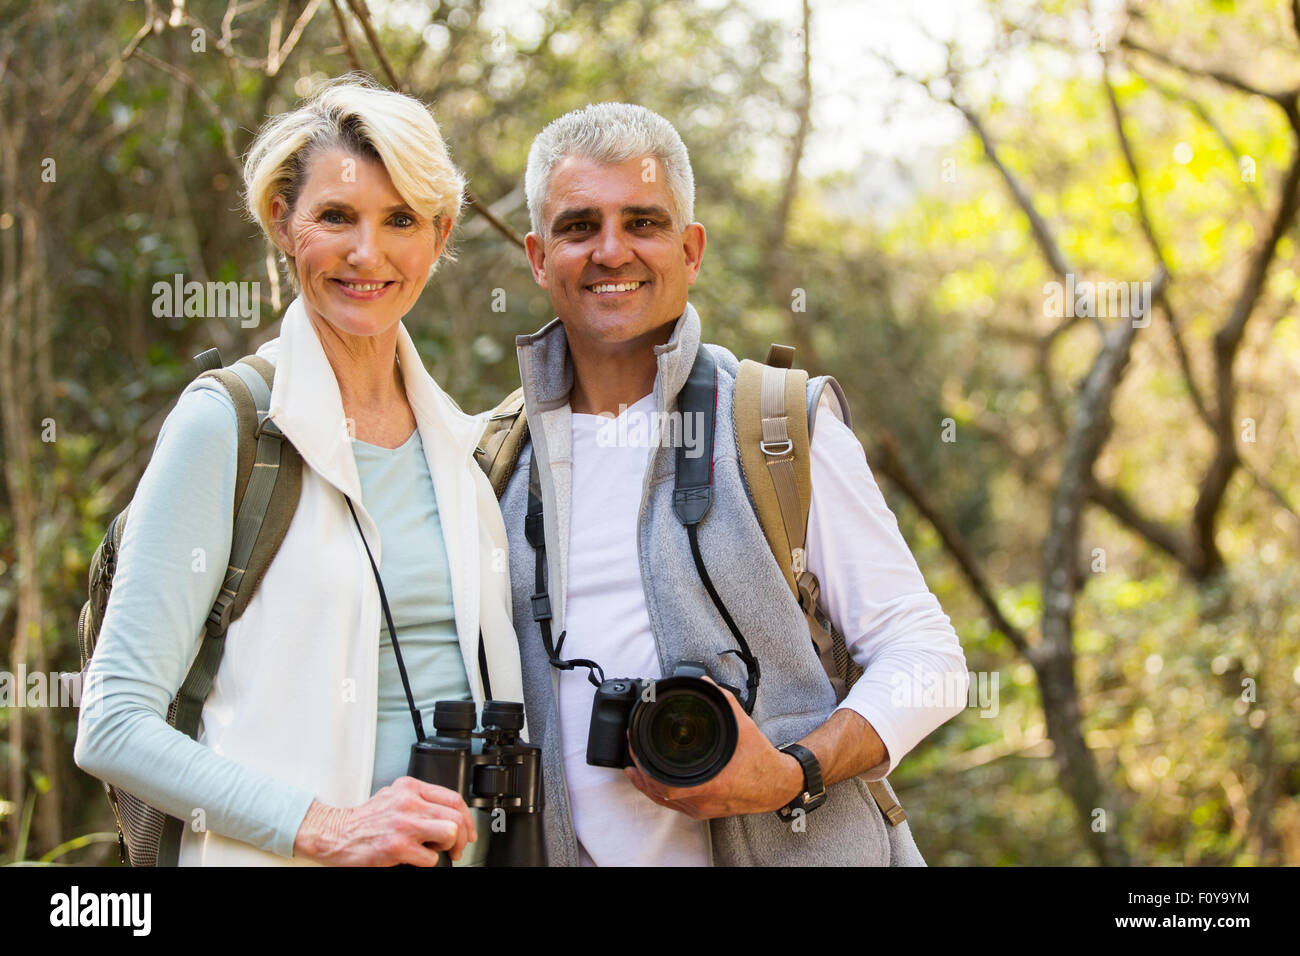 happy hikers couple enjoying outdoor activity Stock Photo